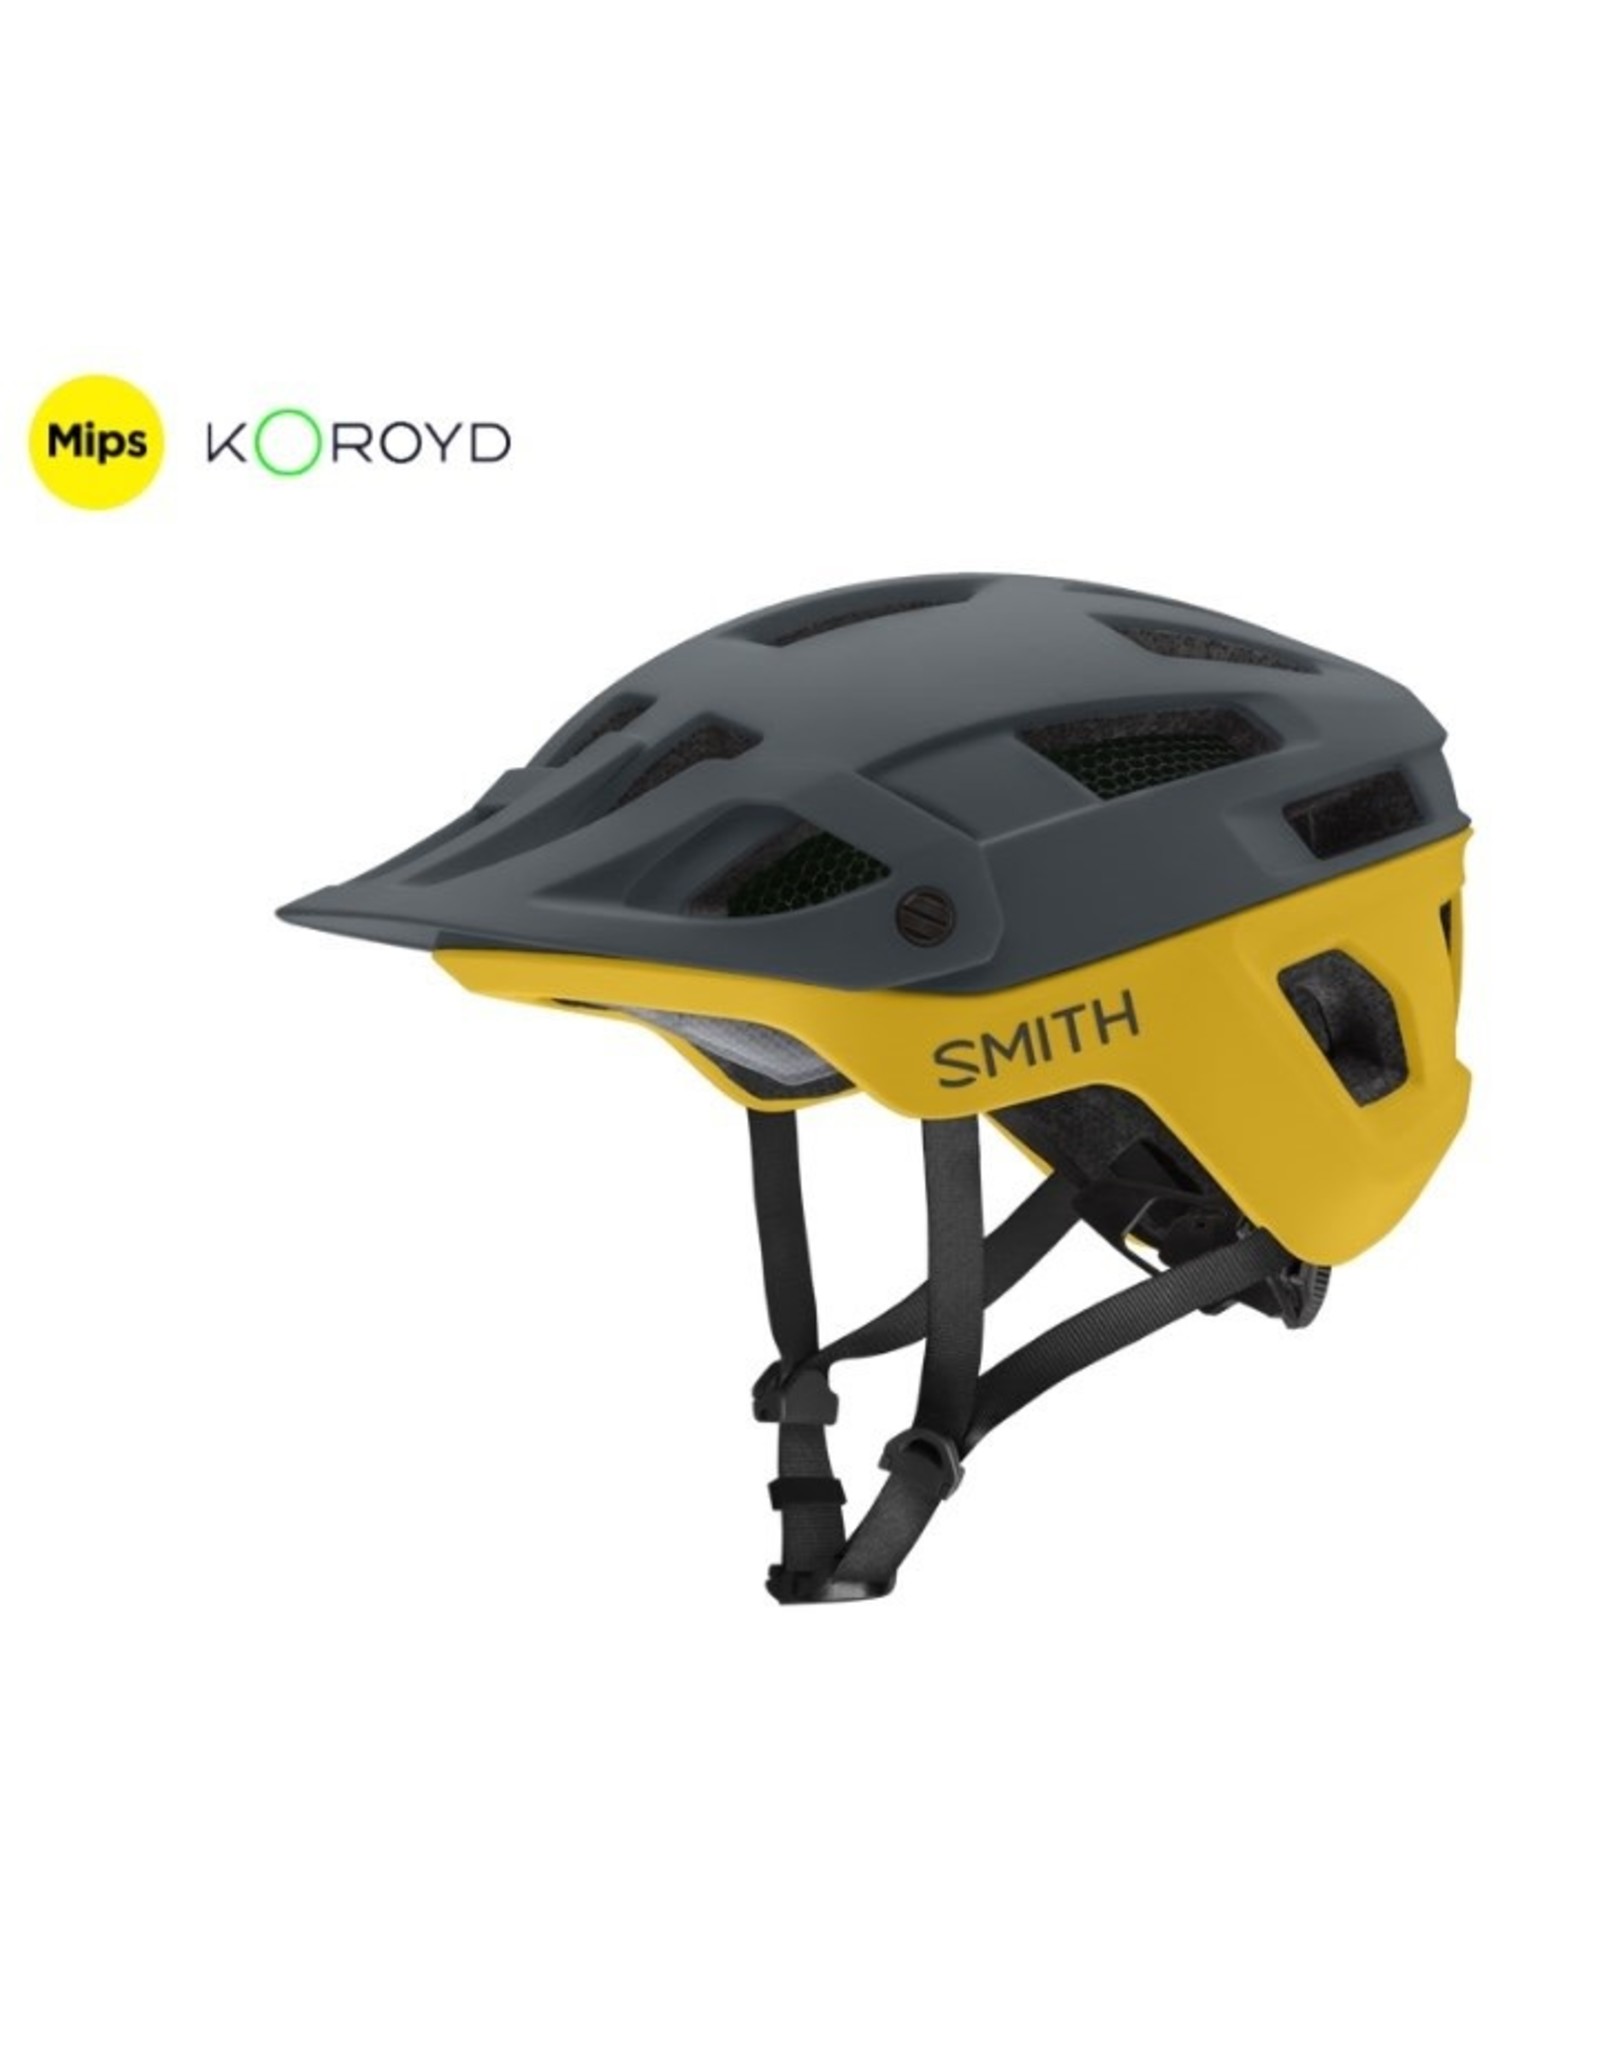 Smith Helmet Smith Engage Mips Koroyd